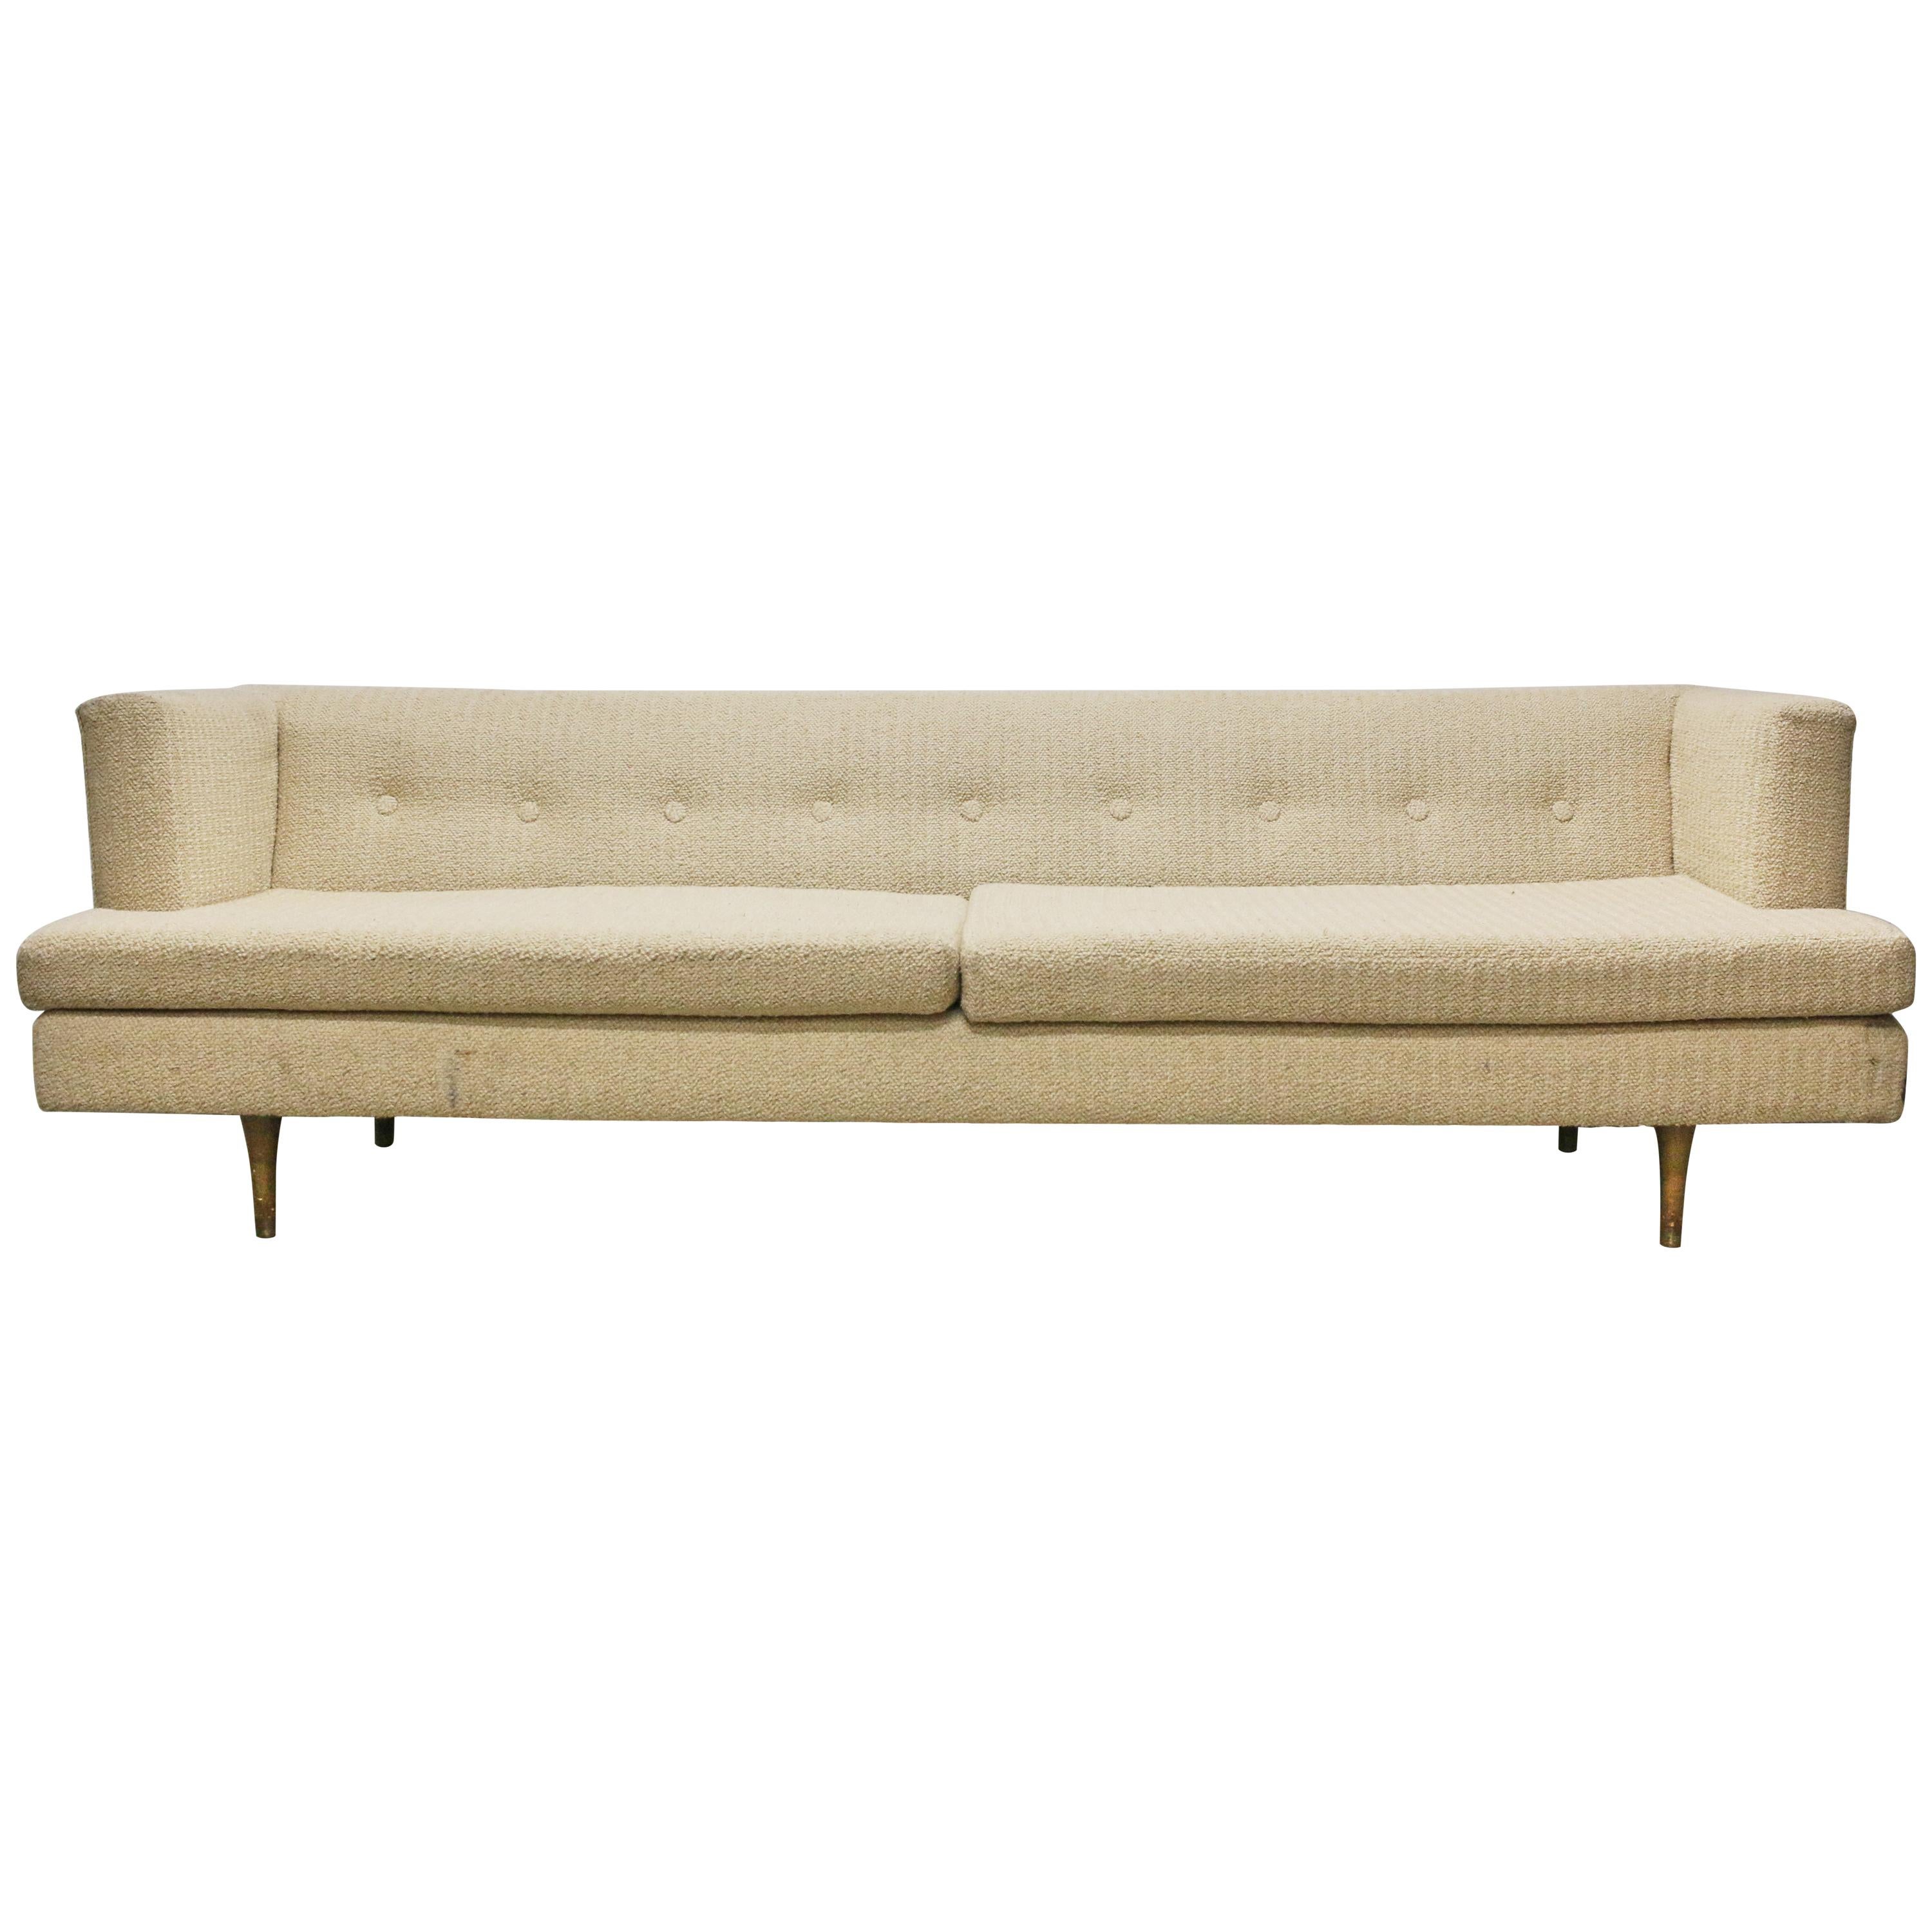 Edward Wormley Even Arm Sofa, made by Dunbar, USA, 1950s